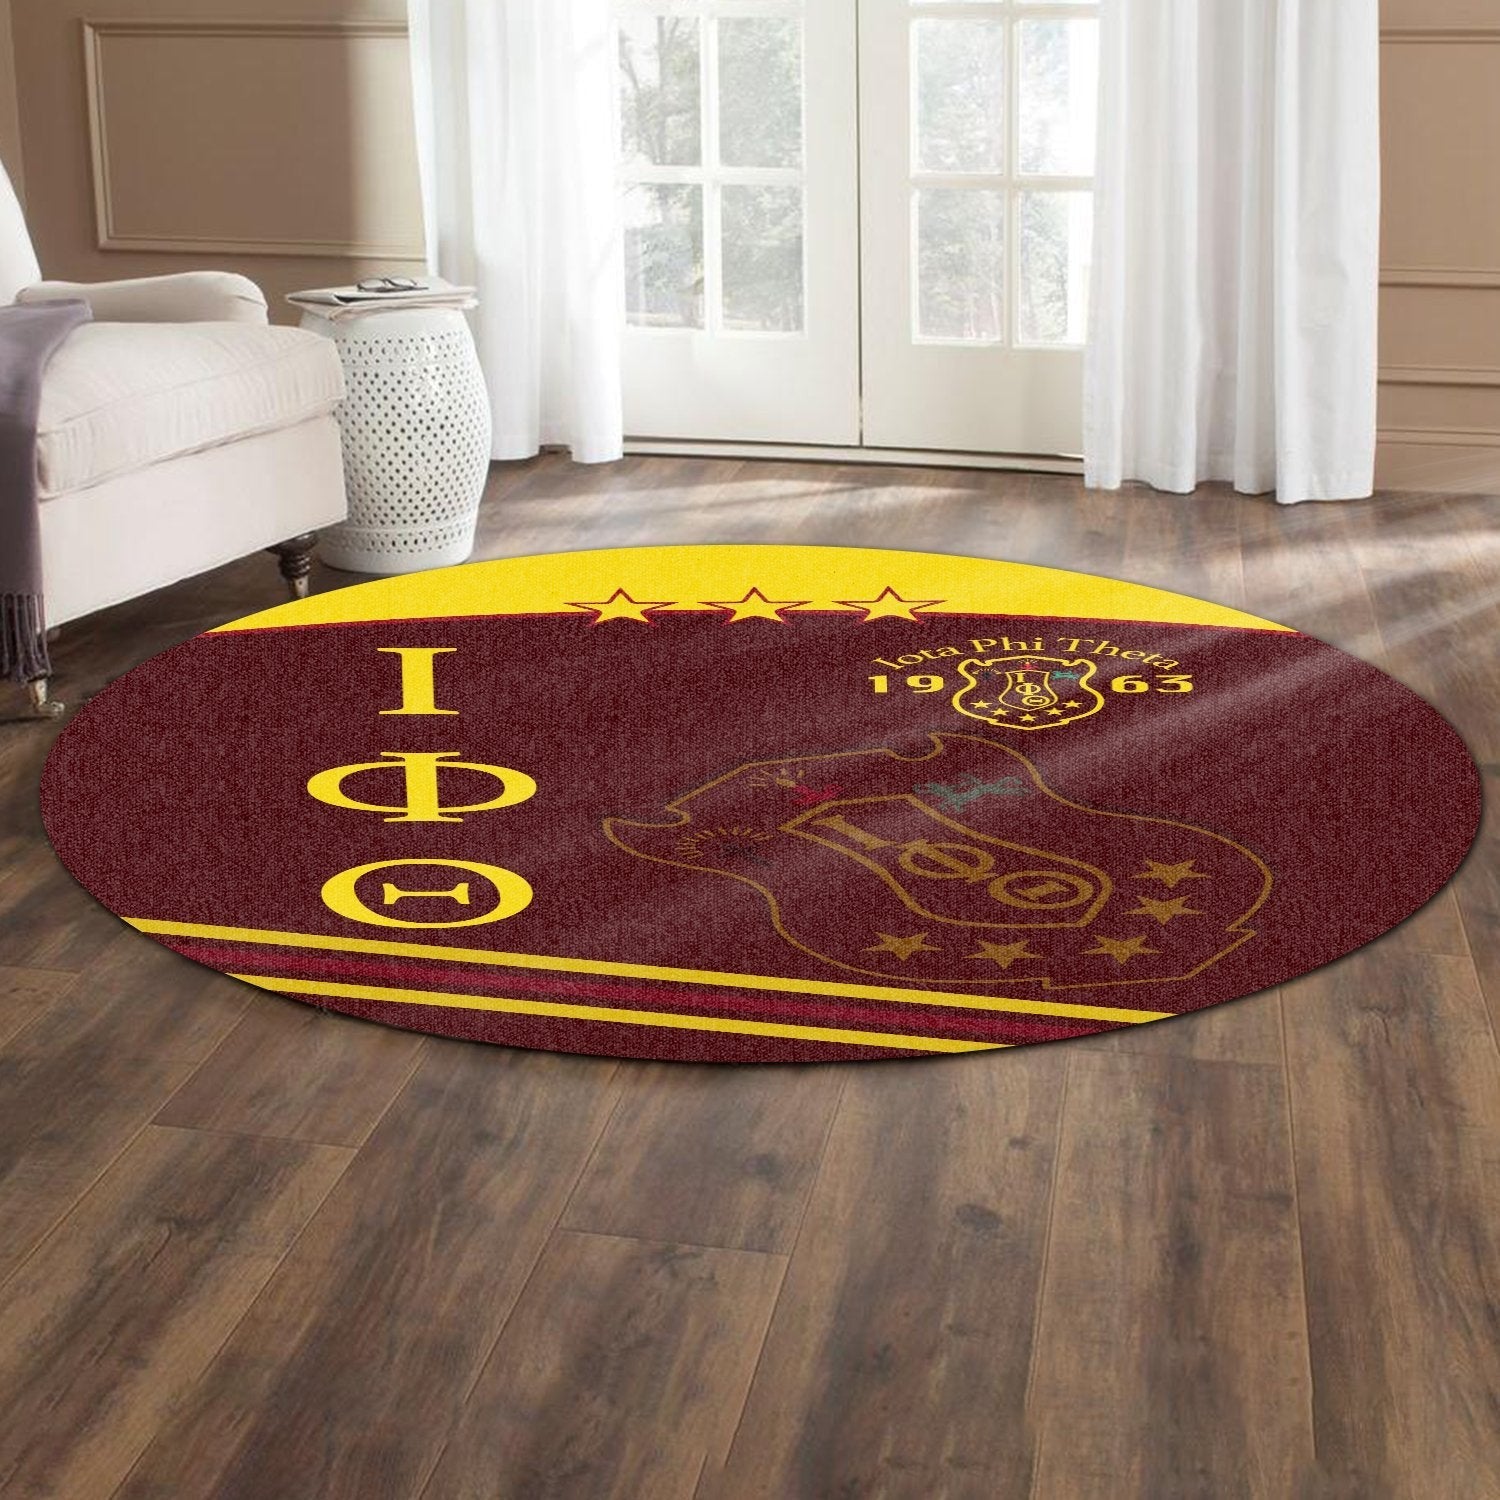 Fraternity Carpet - Iota Phi Theta Round Carpet Newest